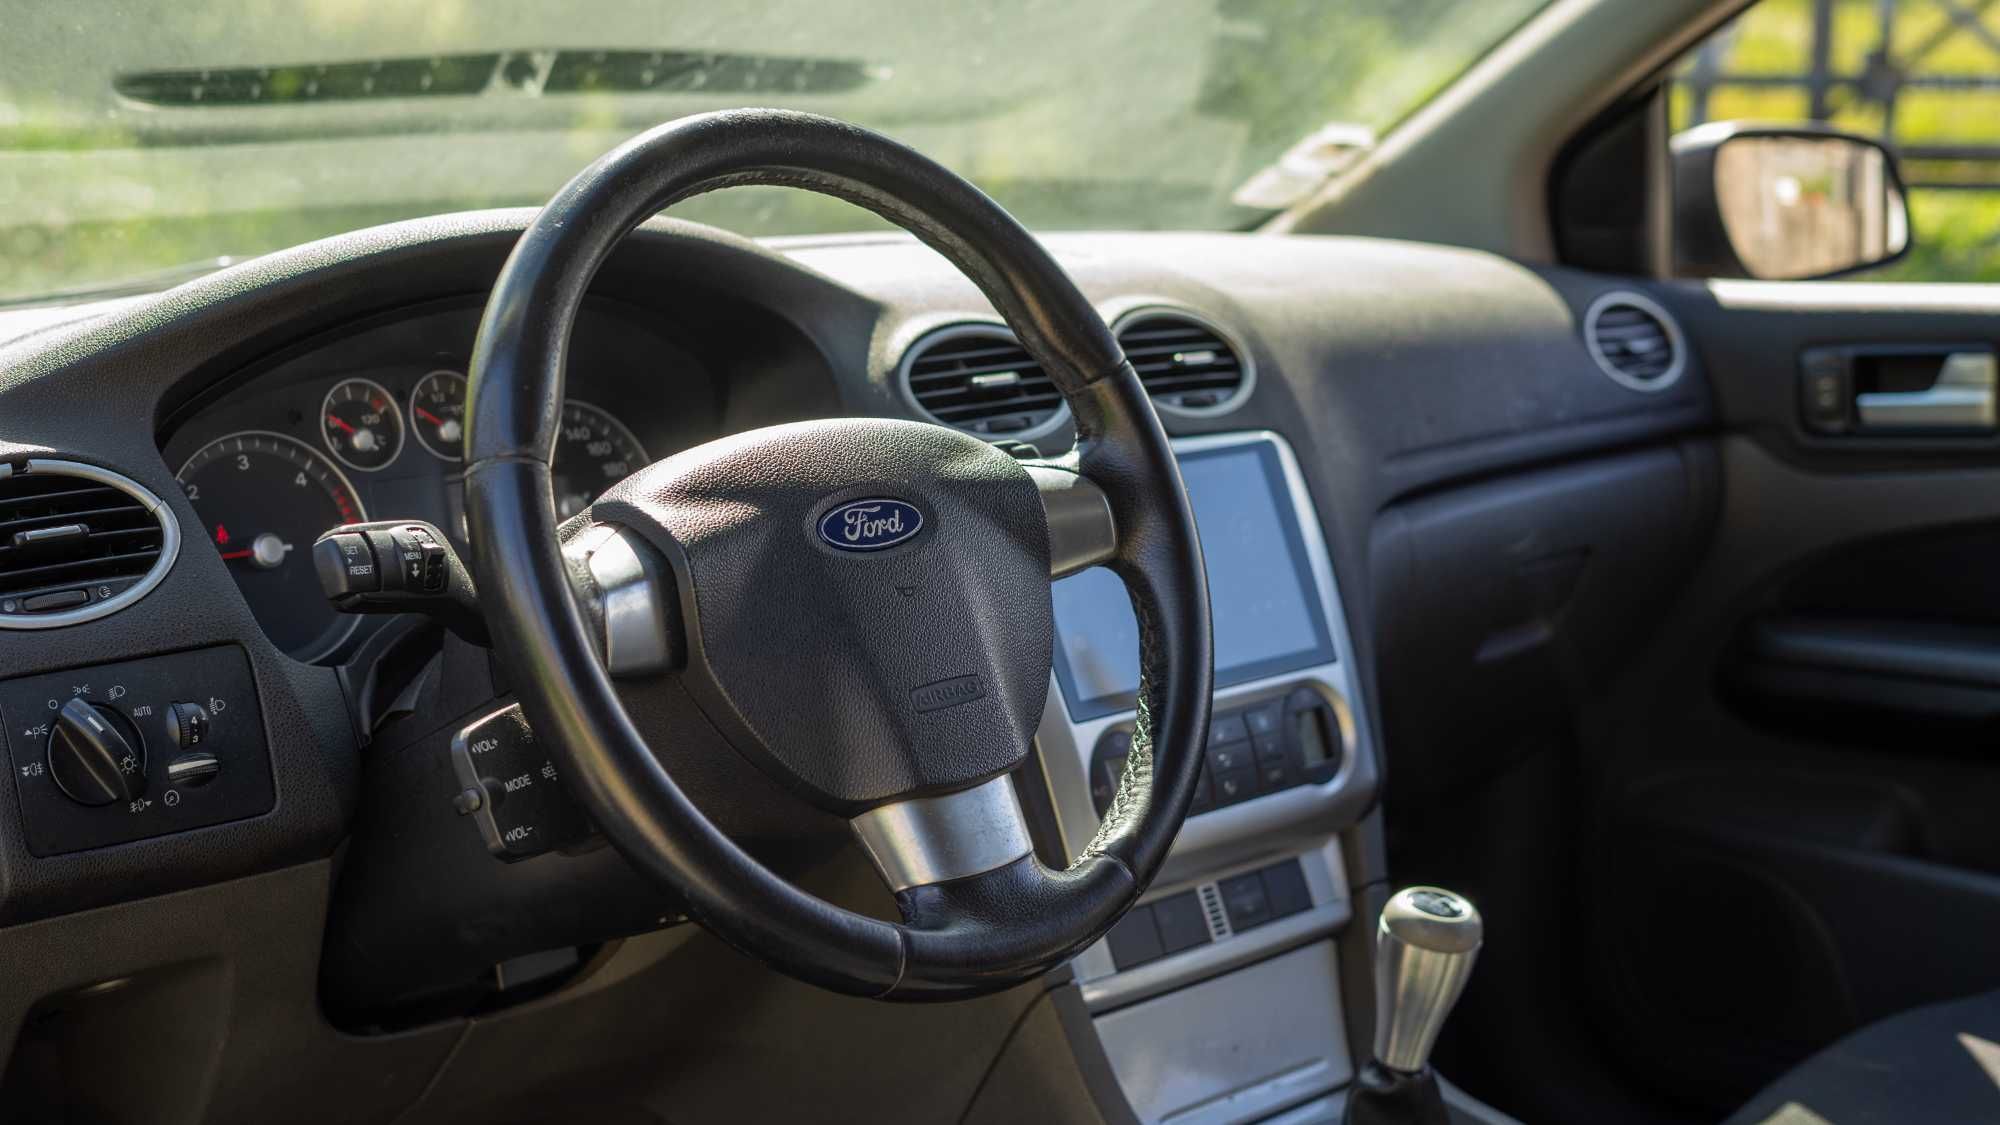 Ford Focus 1.6 Tdci 110CV Van Comercial Ligeiro